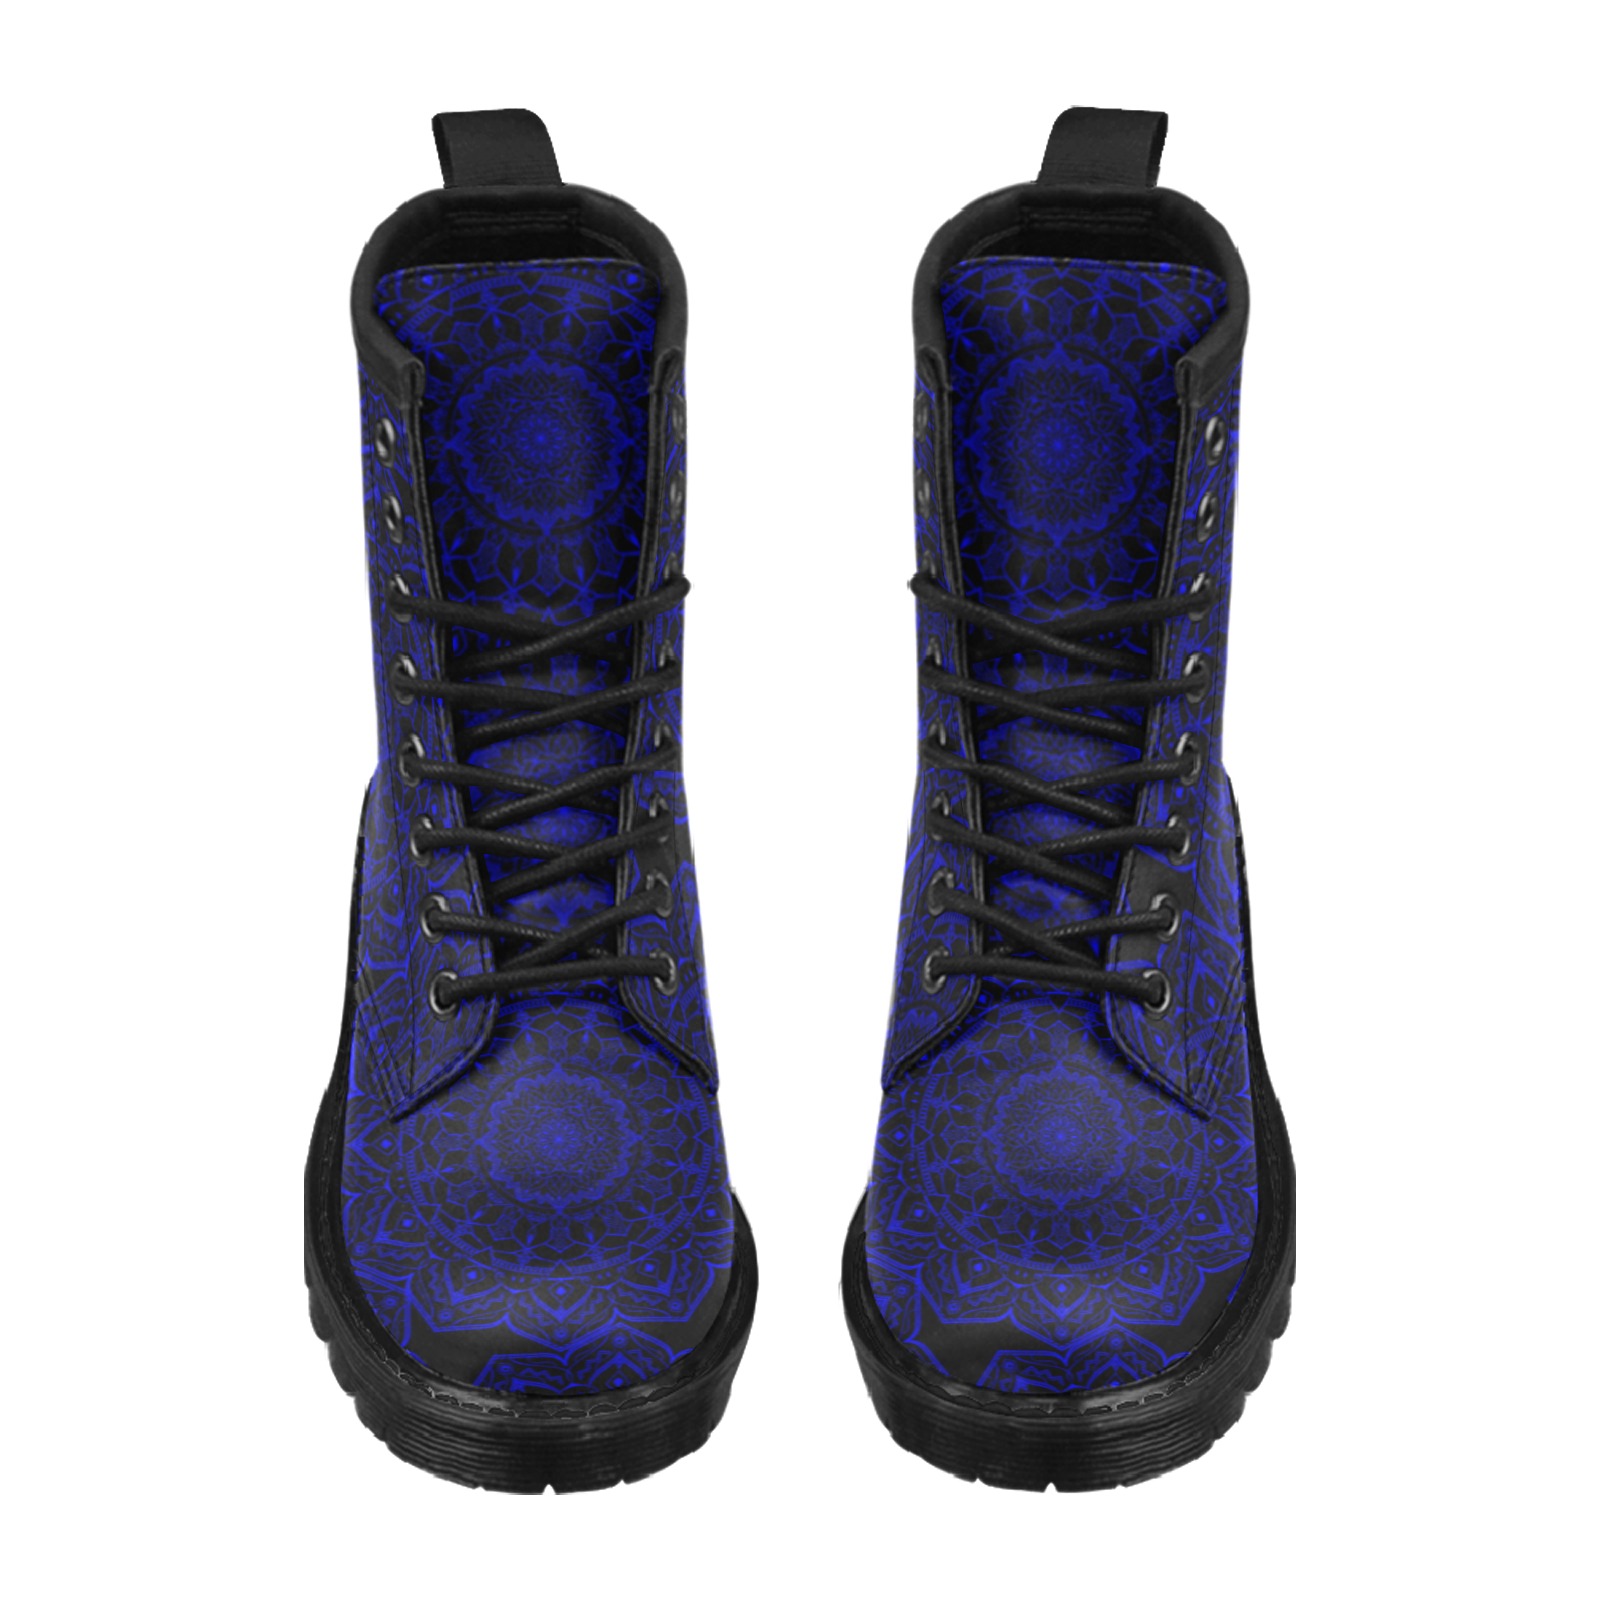 Blue and Black Mandala Women's PU Leather Martin Boots (Model 402H)